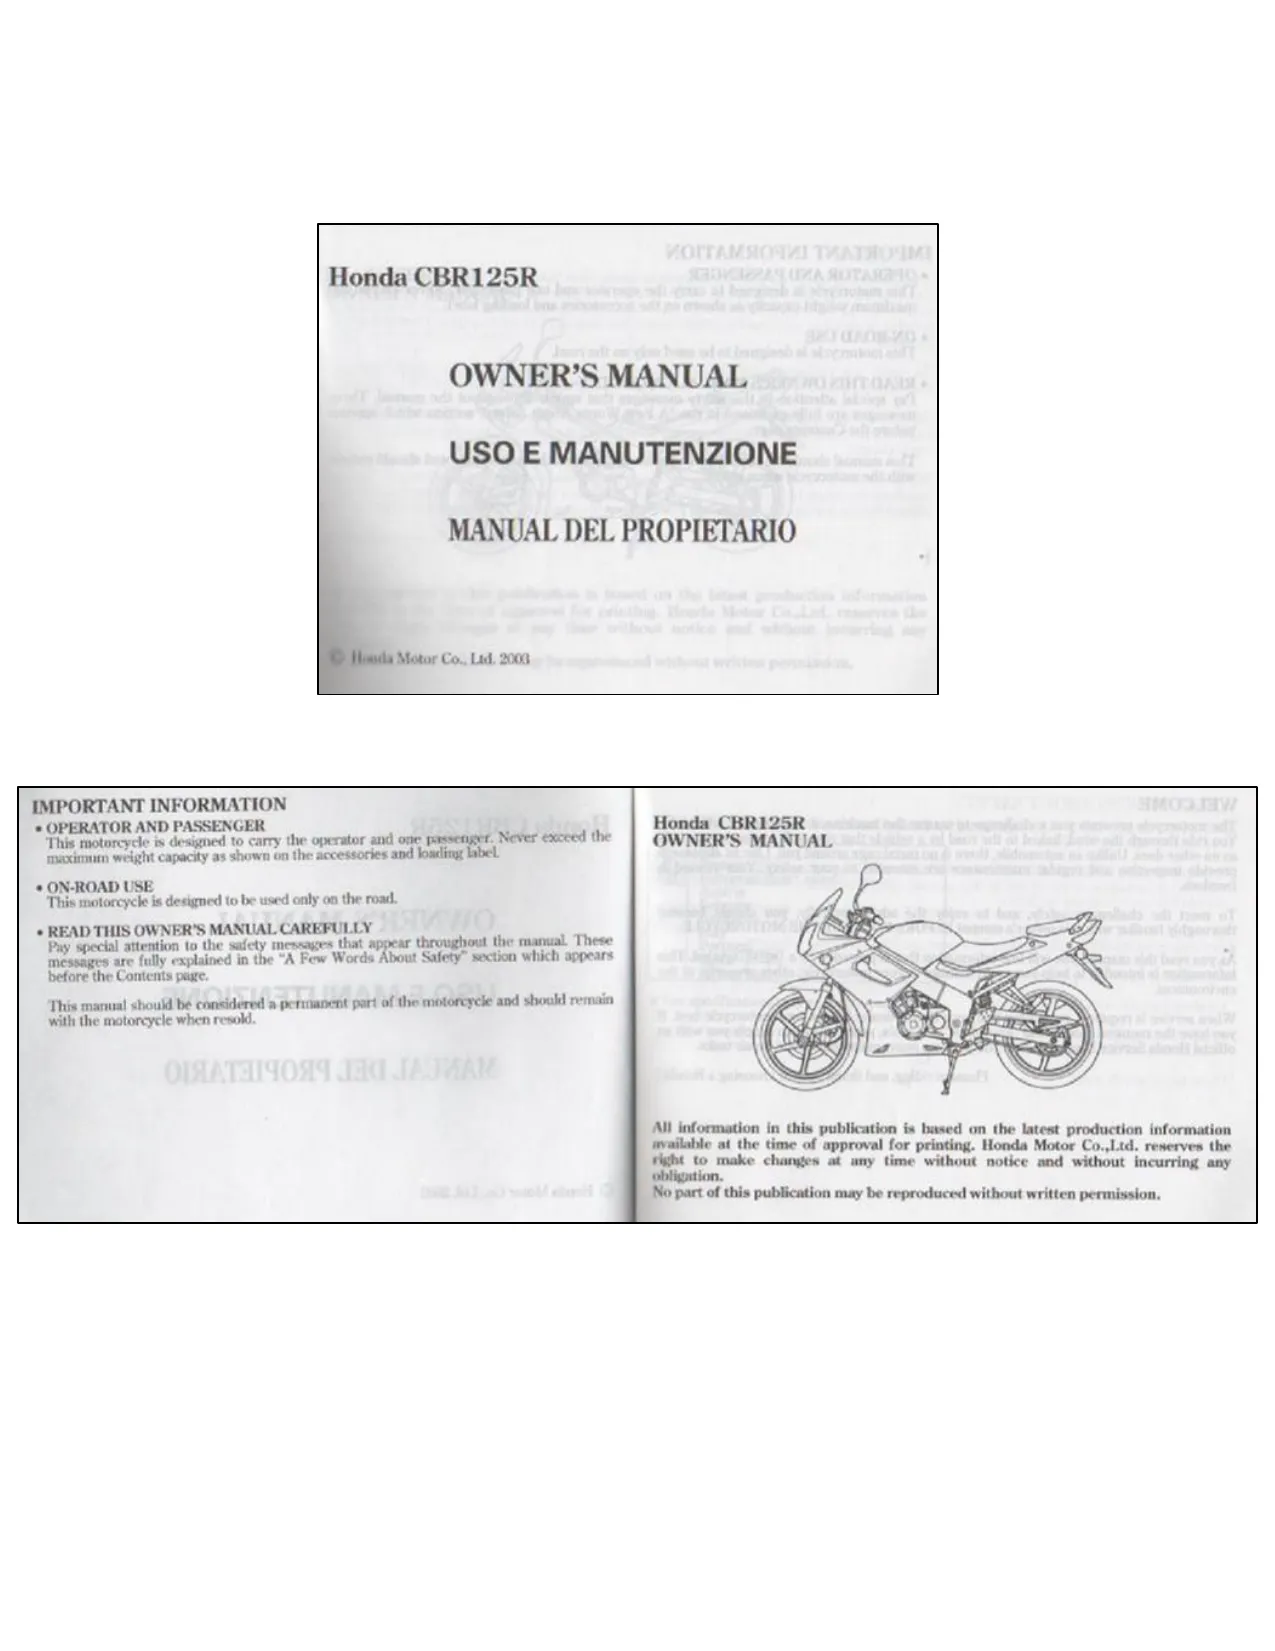 Honda CBR125R owners manual Preview image 2